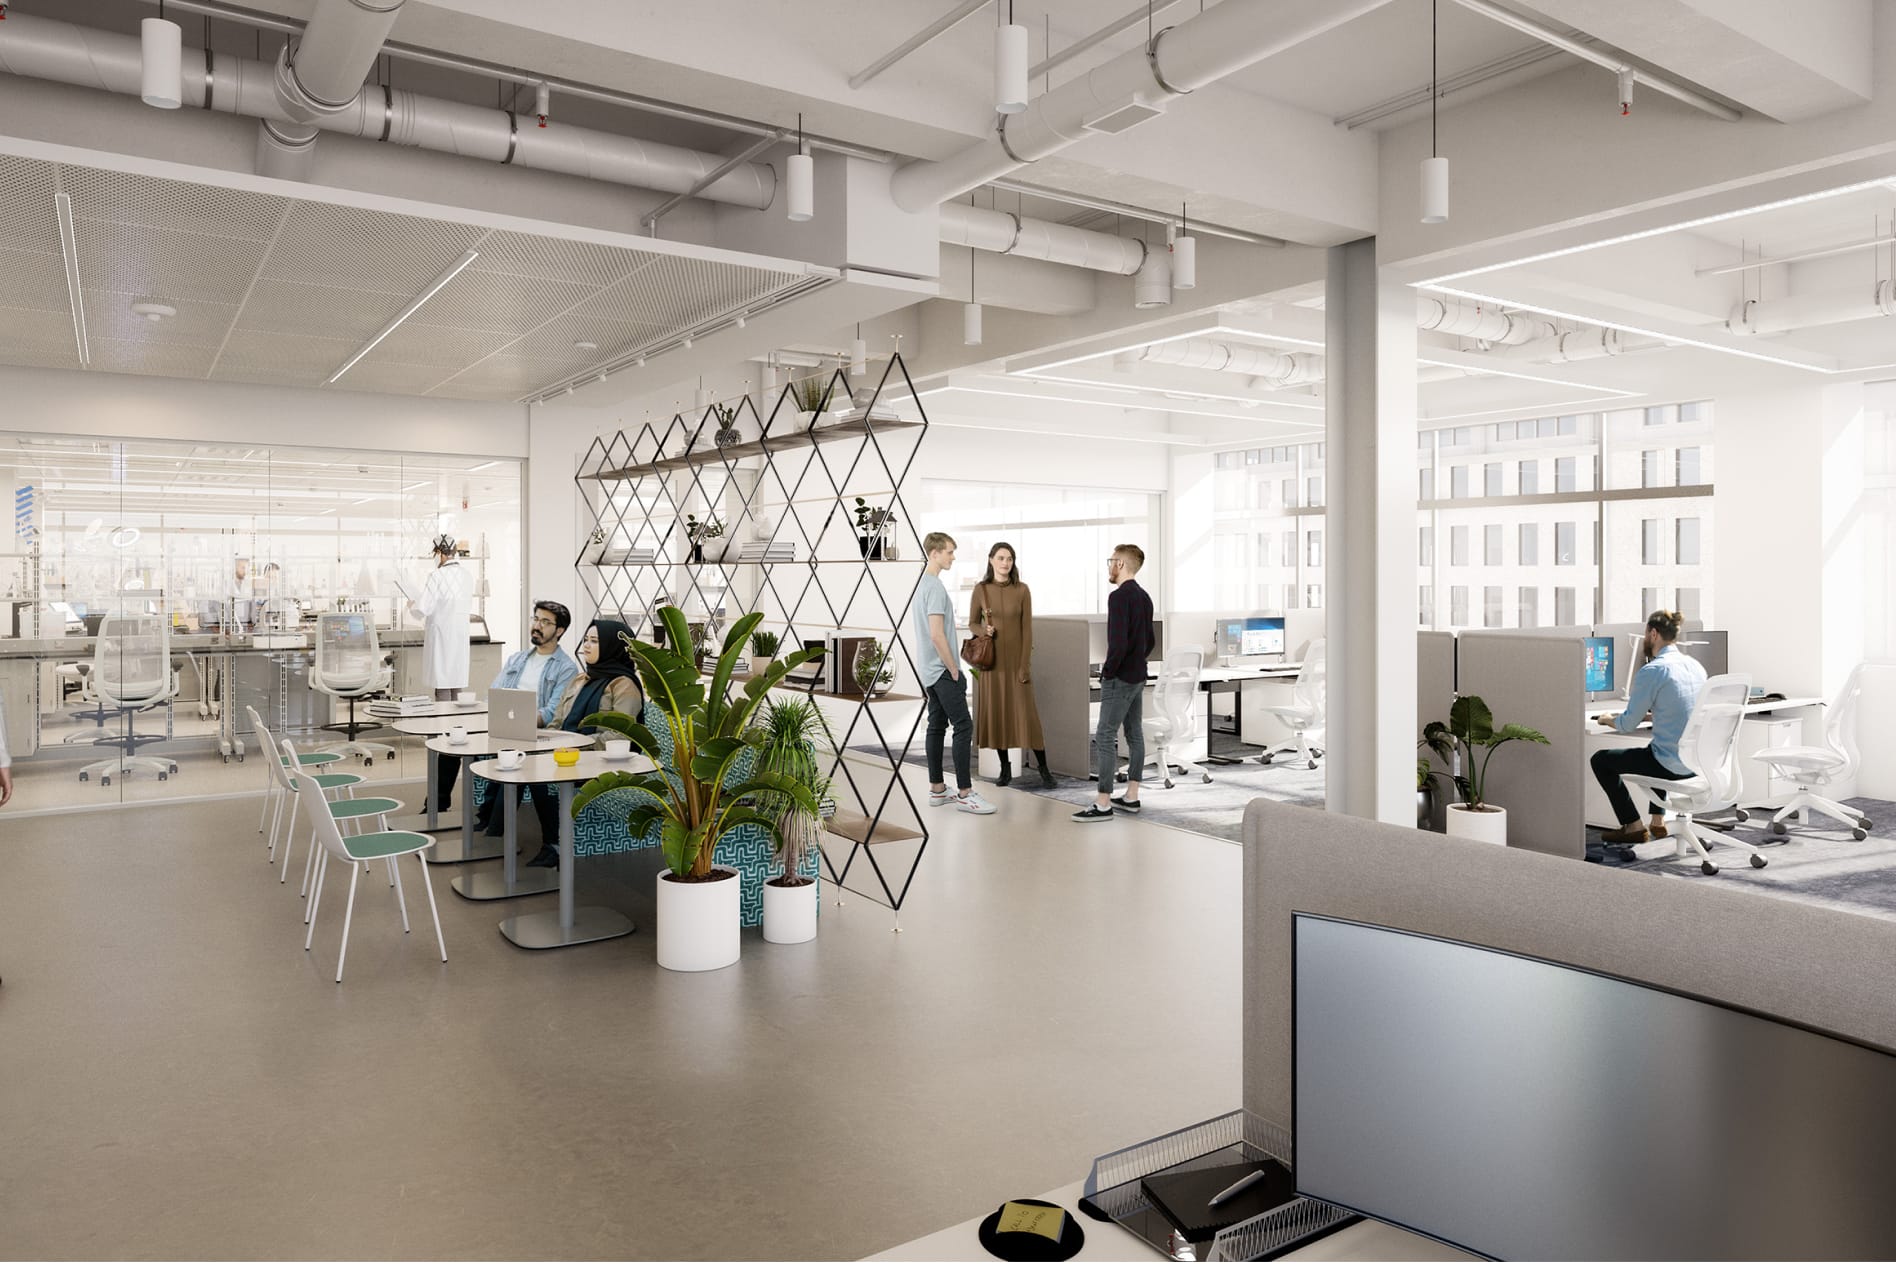 Light-filled workspaces designed for life science tenants